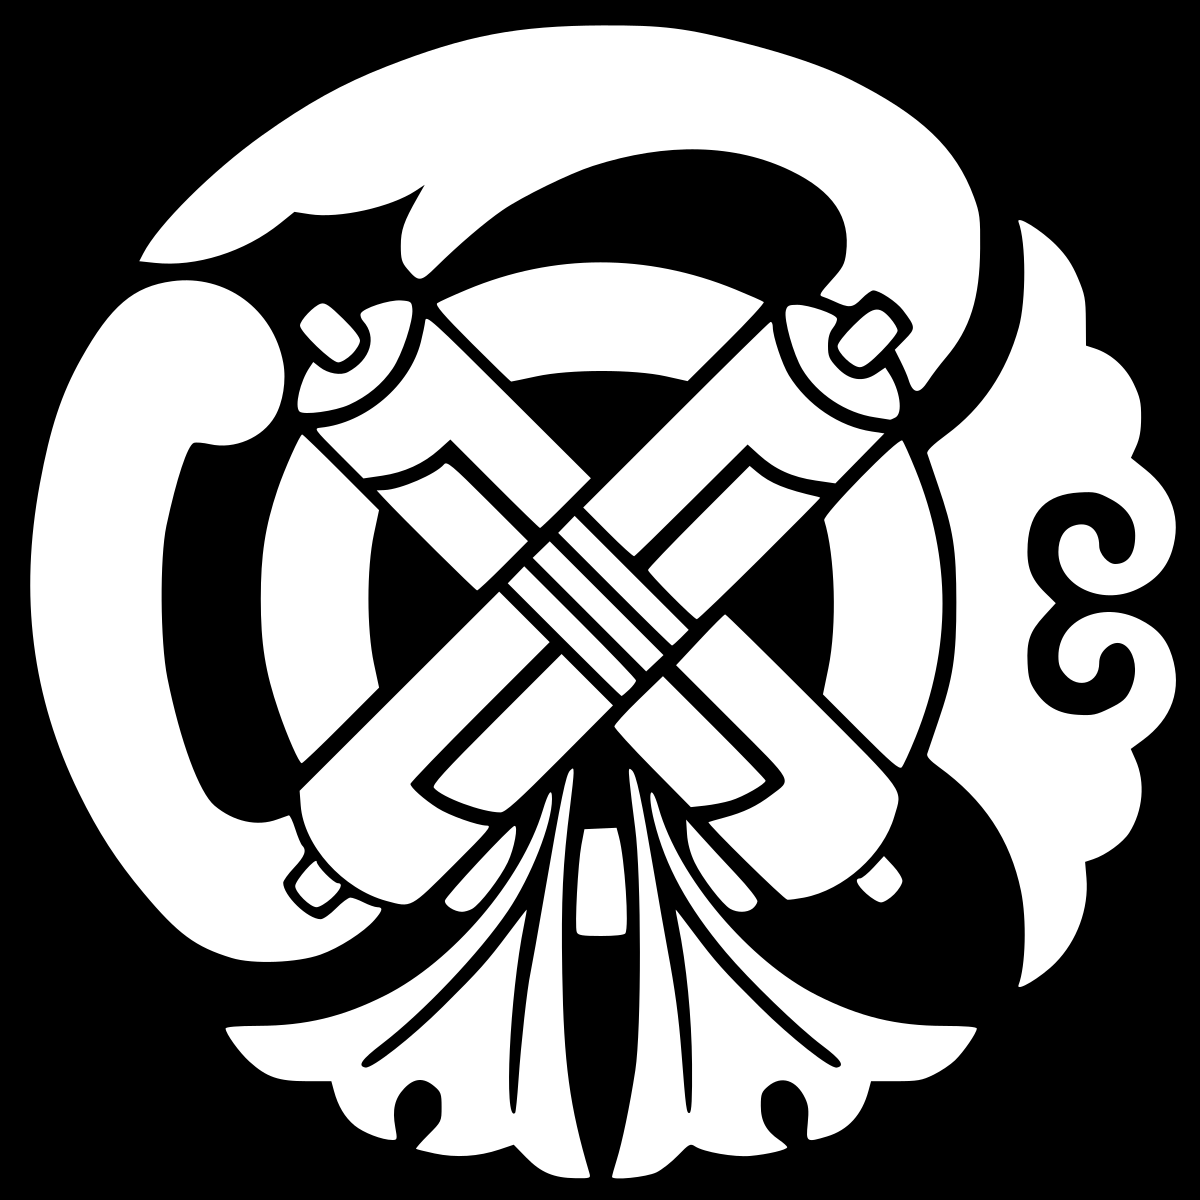 Original SCP Foundation Logo Tattoo Ideas: Images Included